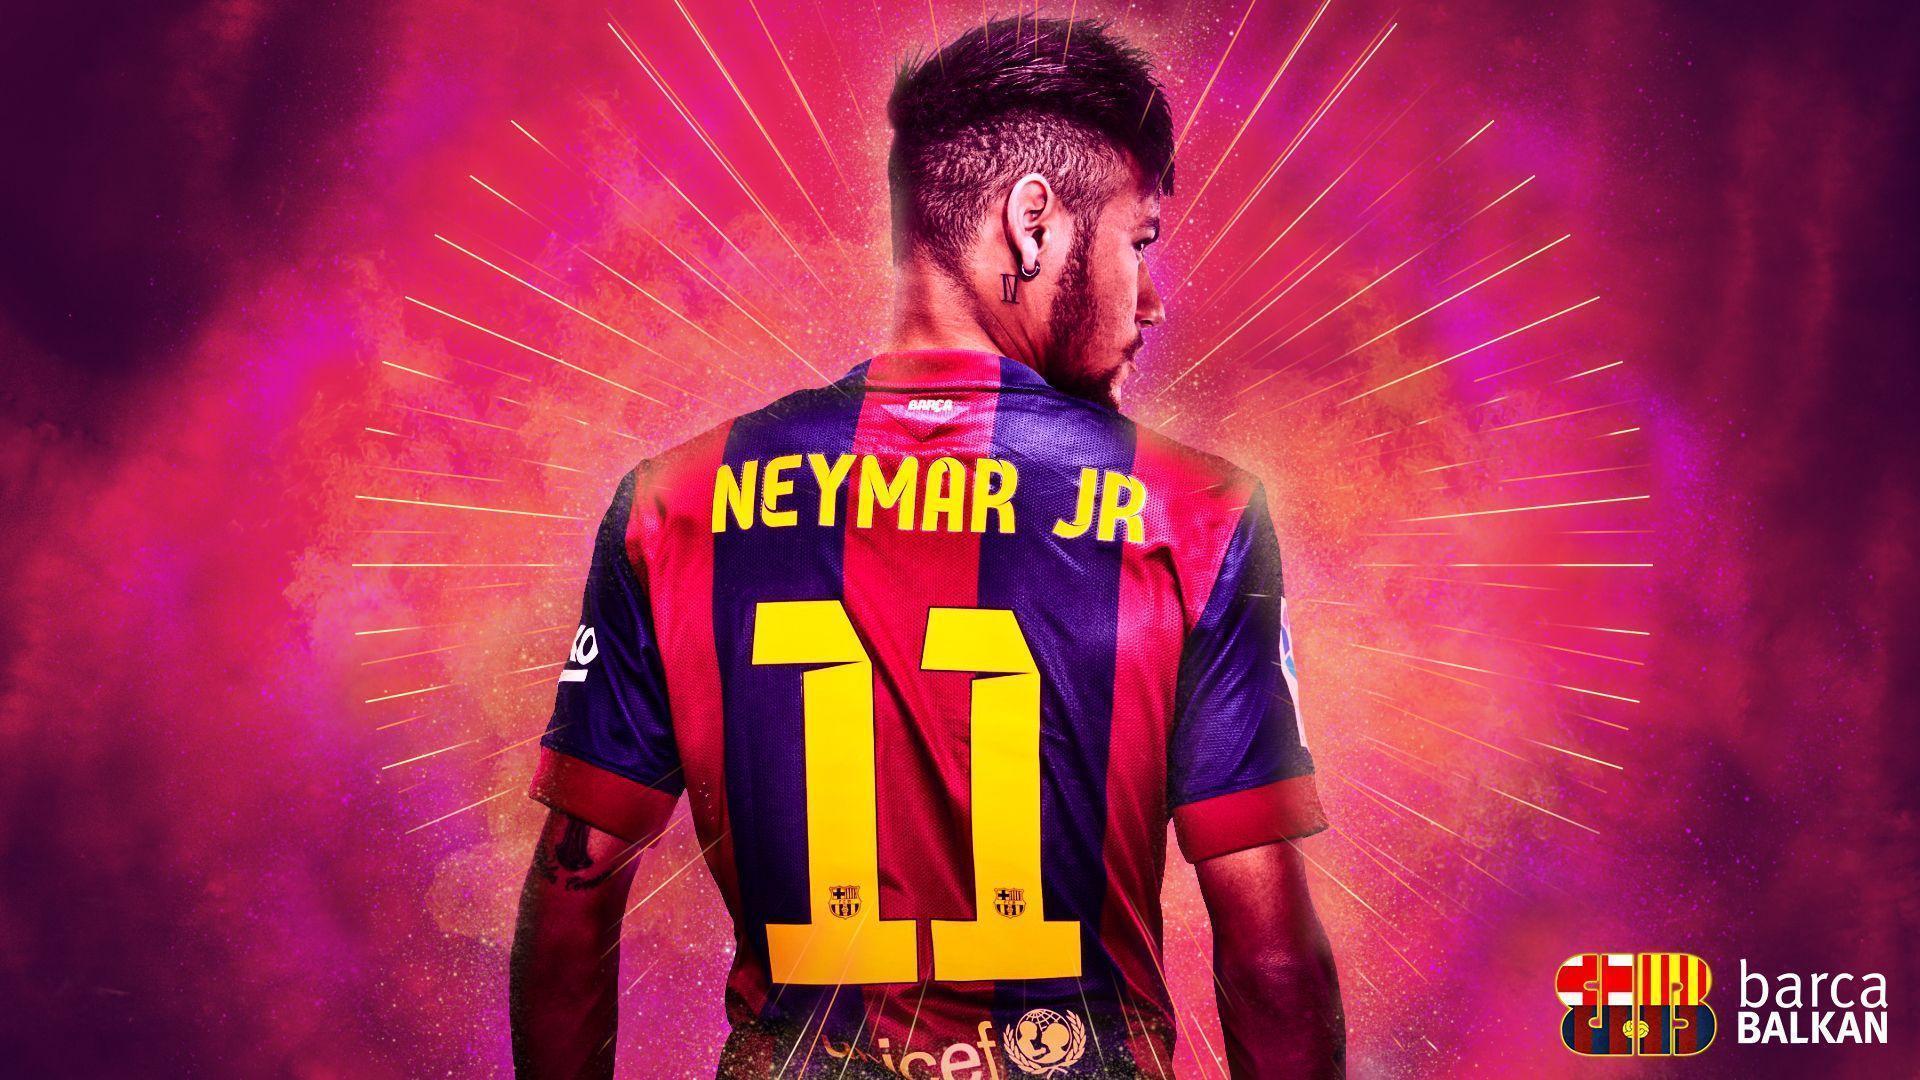 image about Neymar Jr Wallpaper. Photo